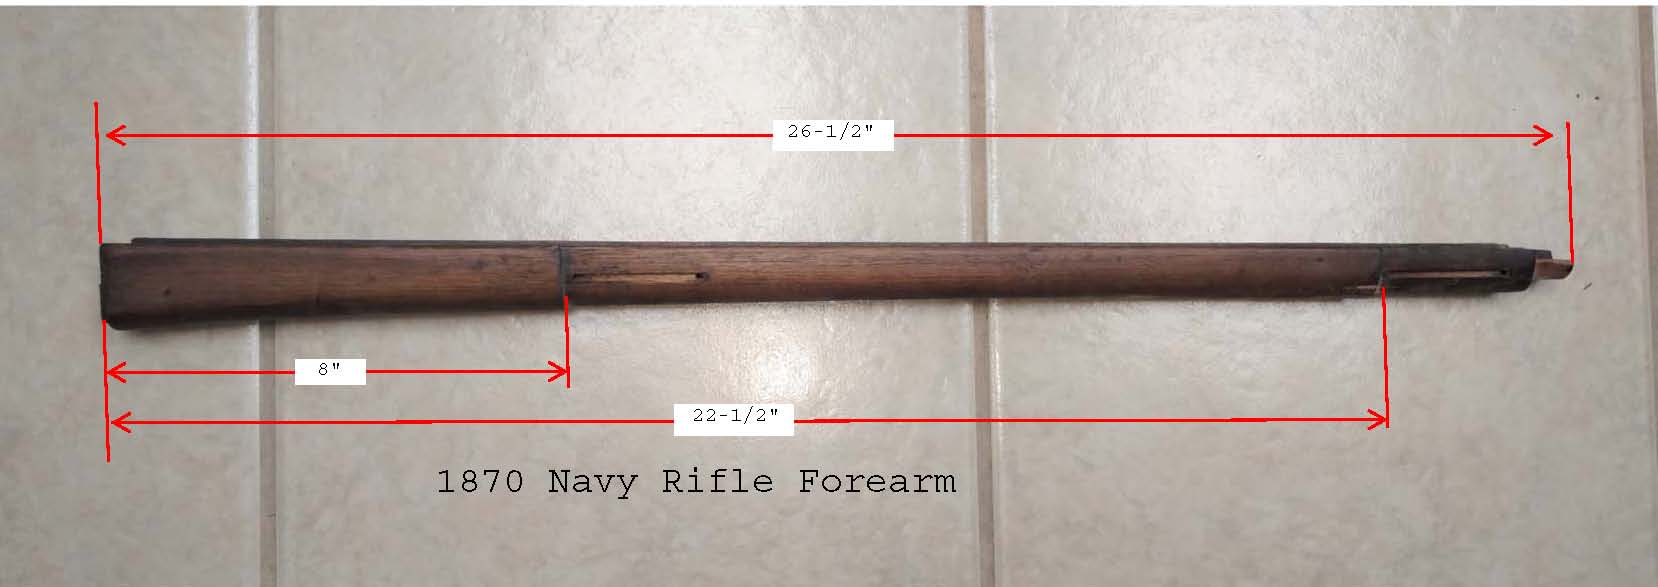 1870 Navy Rifle forearm.jpg